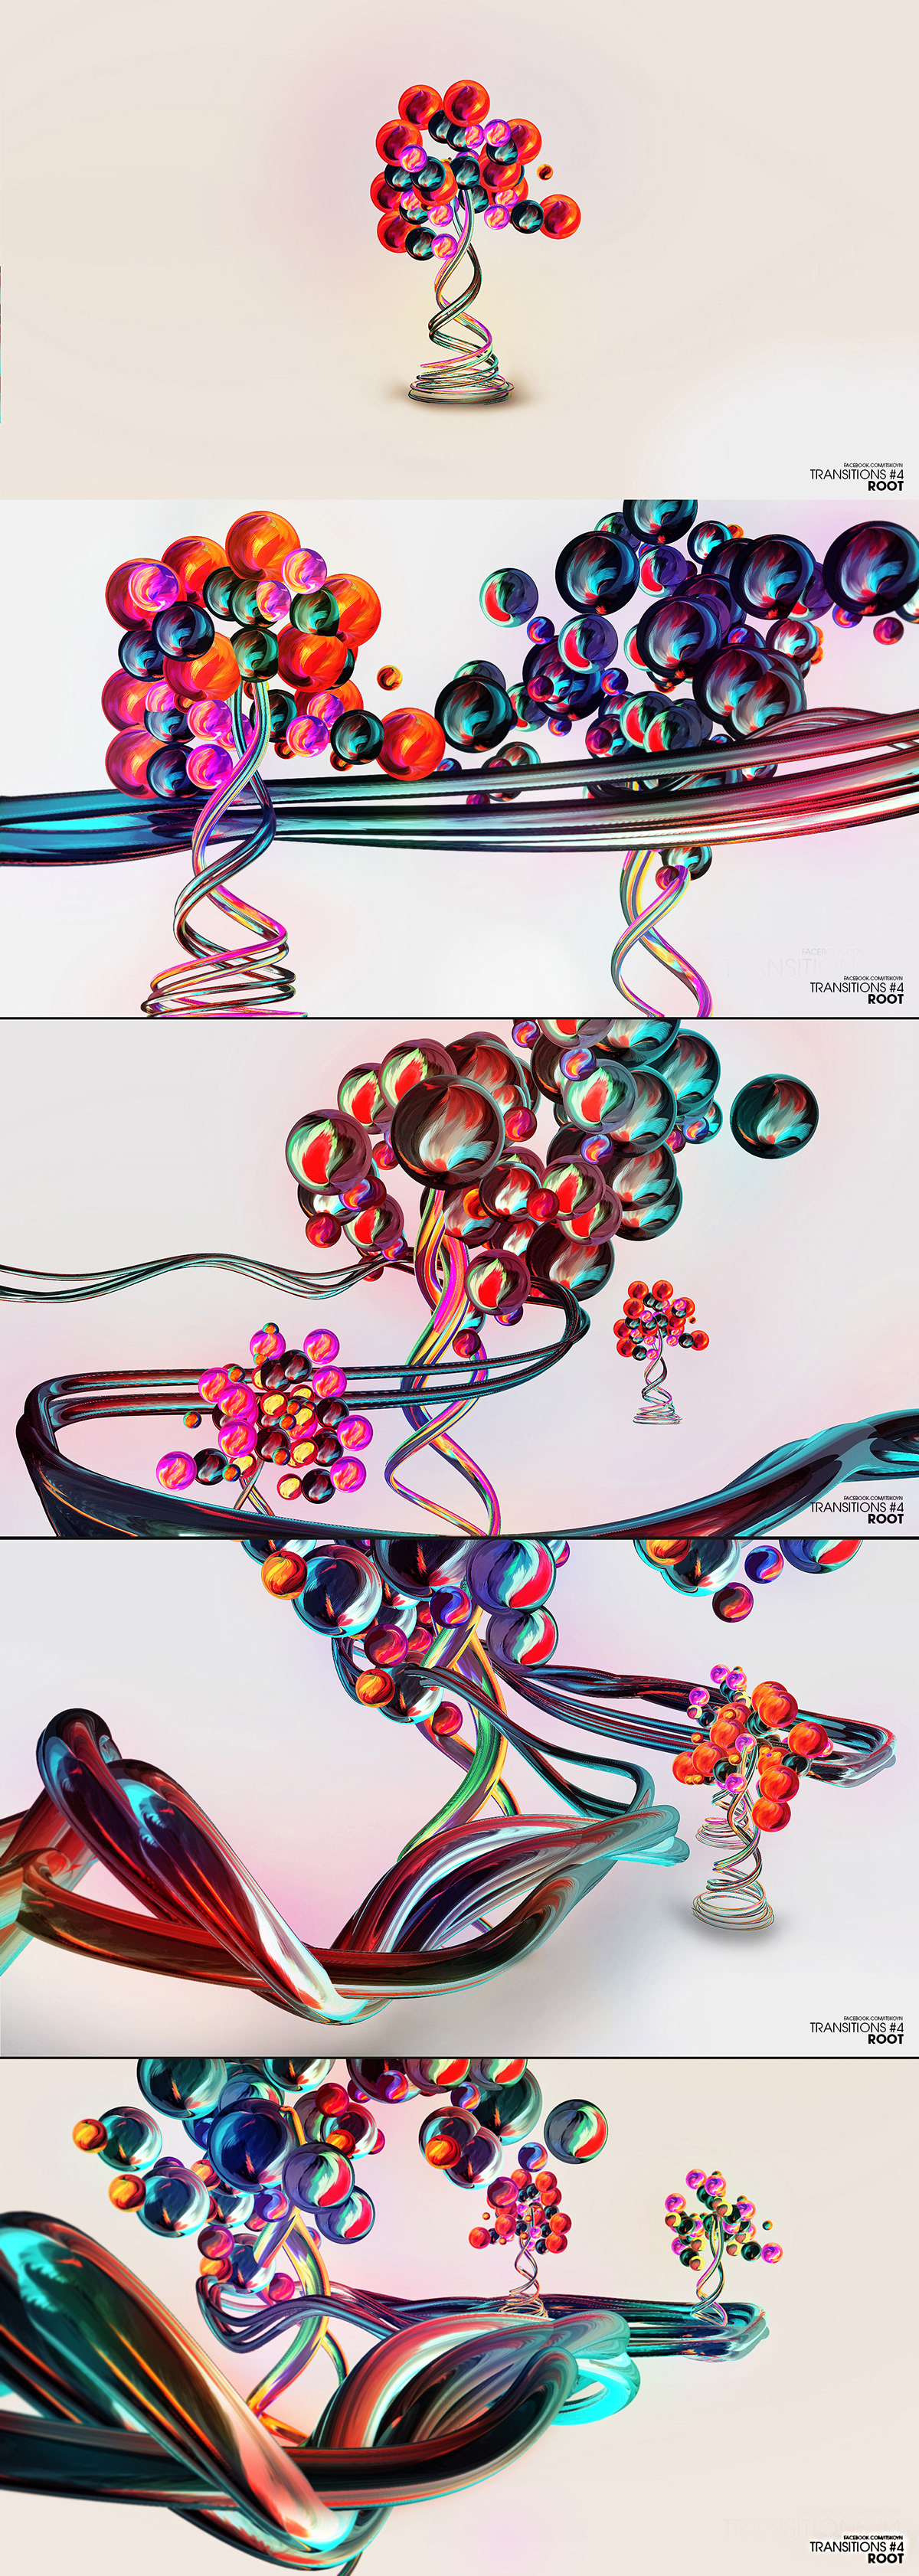 transitions koyn kees Van duyn art 3D cinema4d photoshop Illustrator color colour models Womb